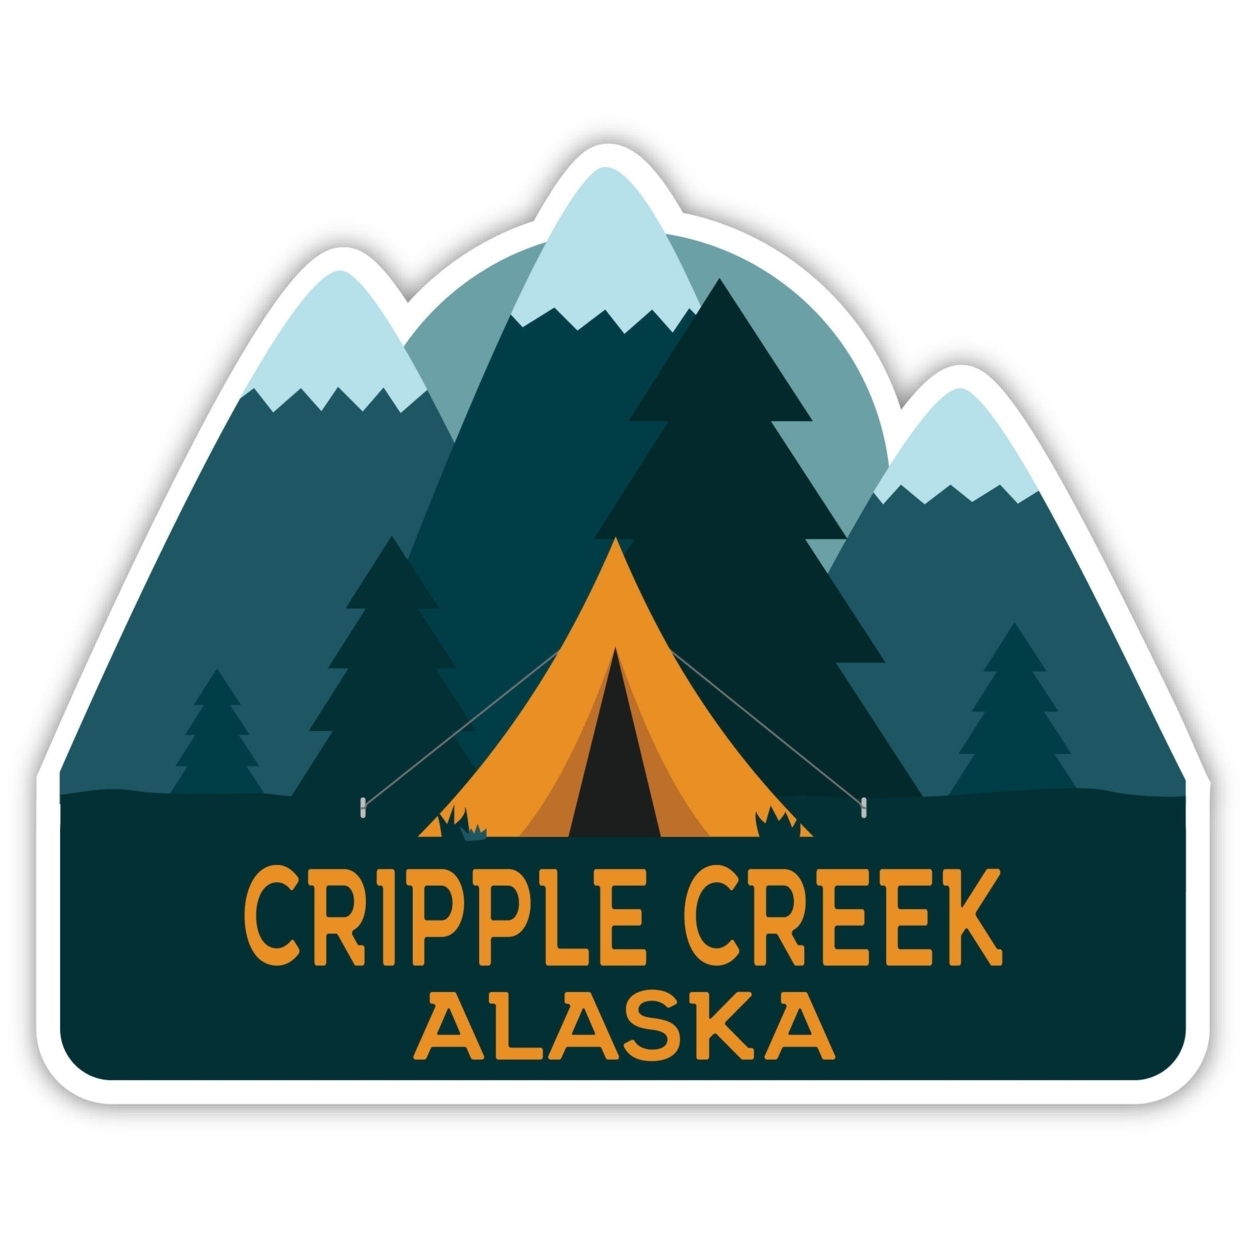 Cripple Creek Alaska Souvenir Decorative Stickers (Choose Theme And Size) - 4-Pack, 12-Inch, Tent